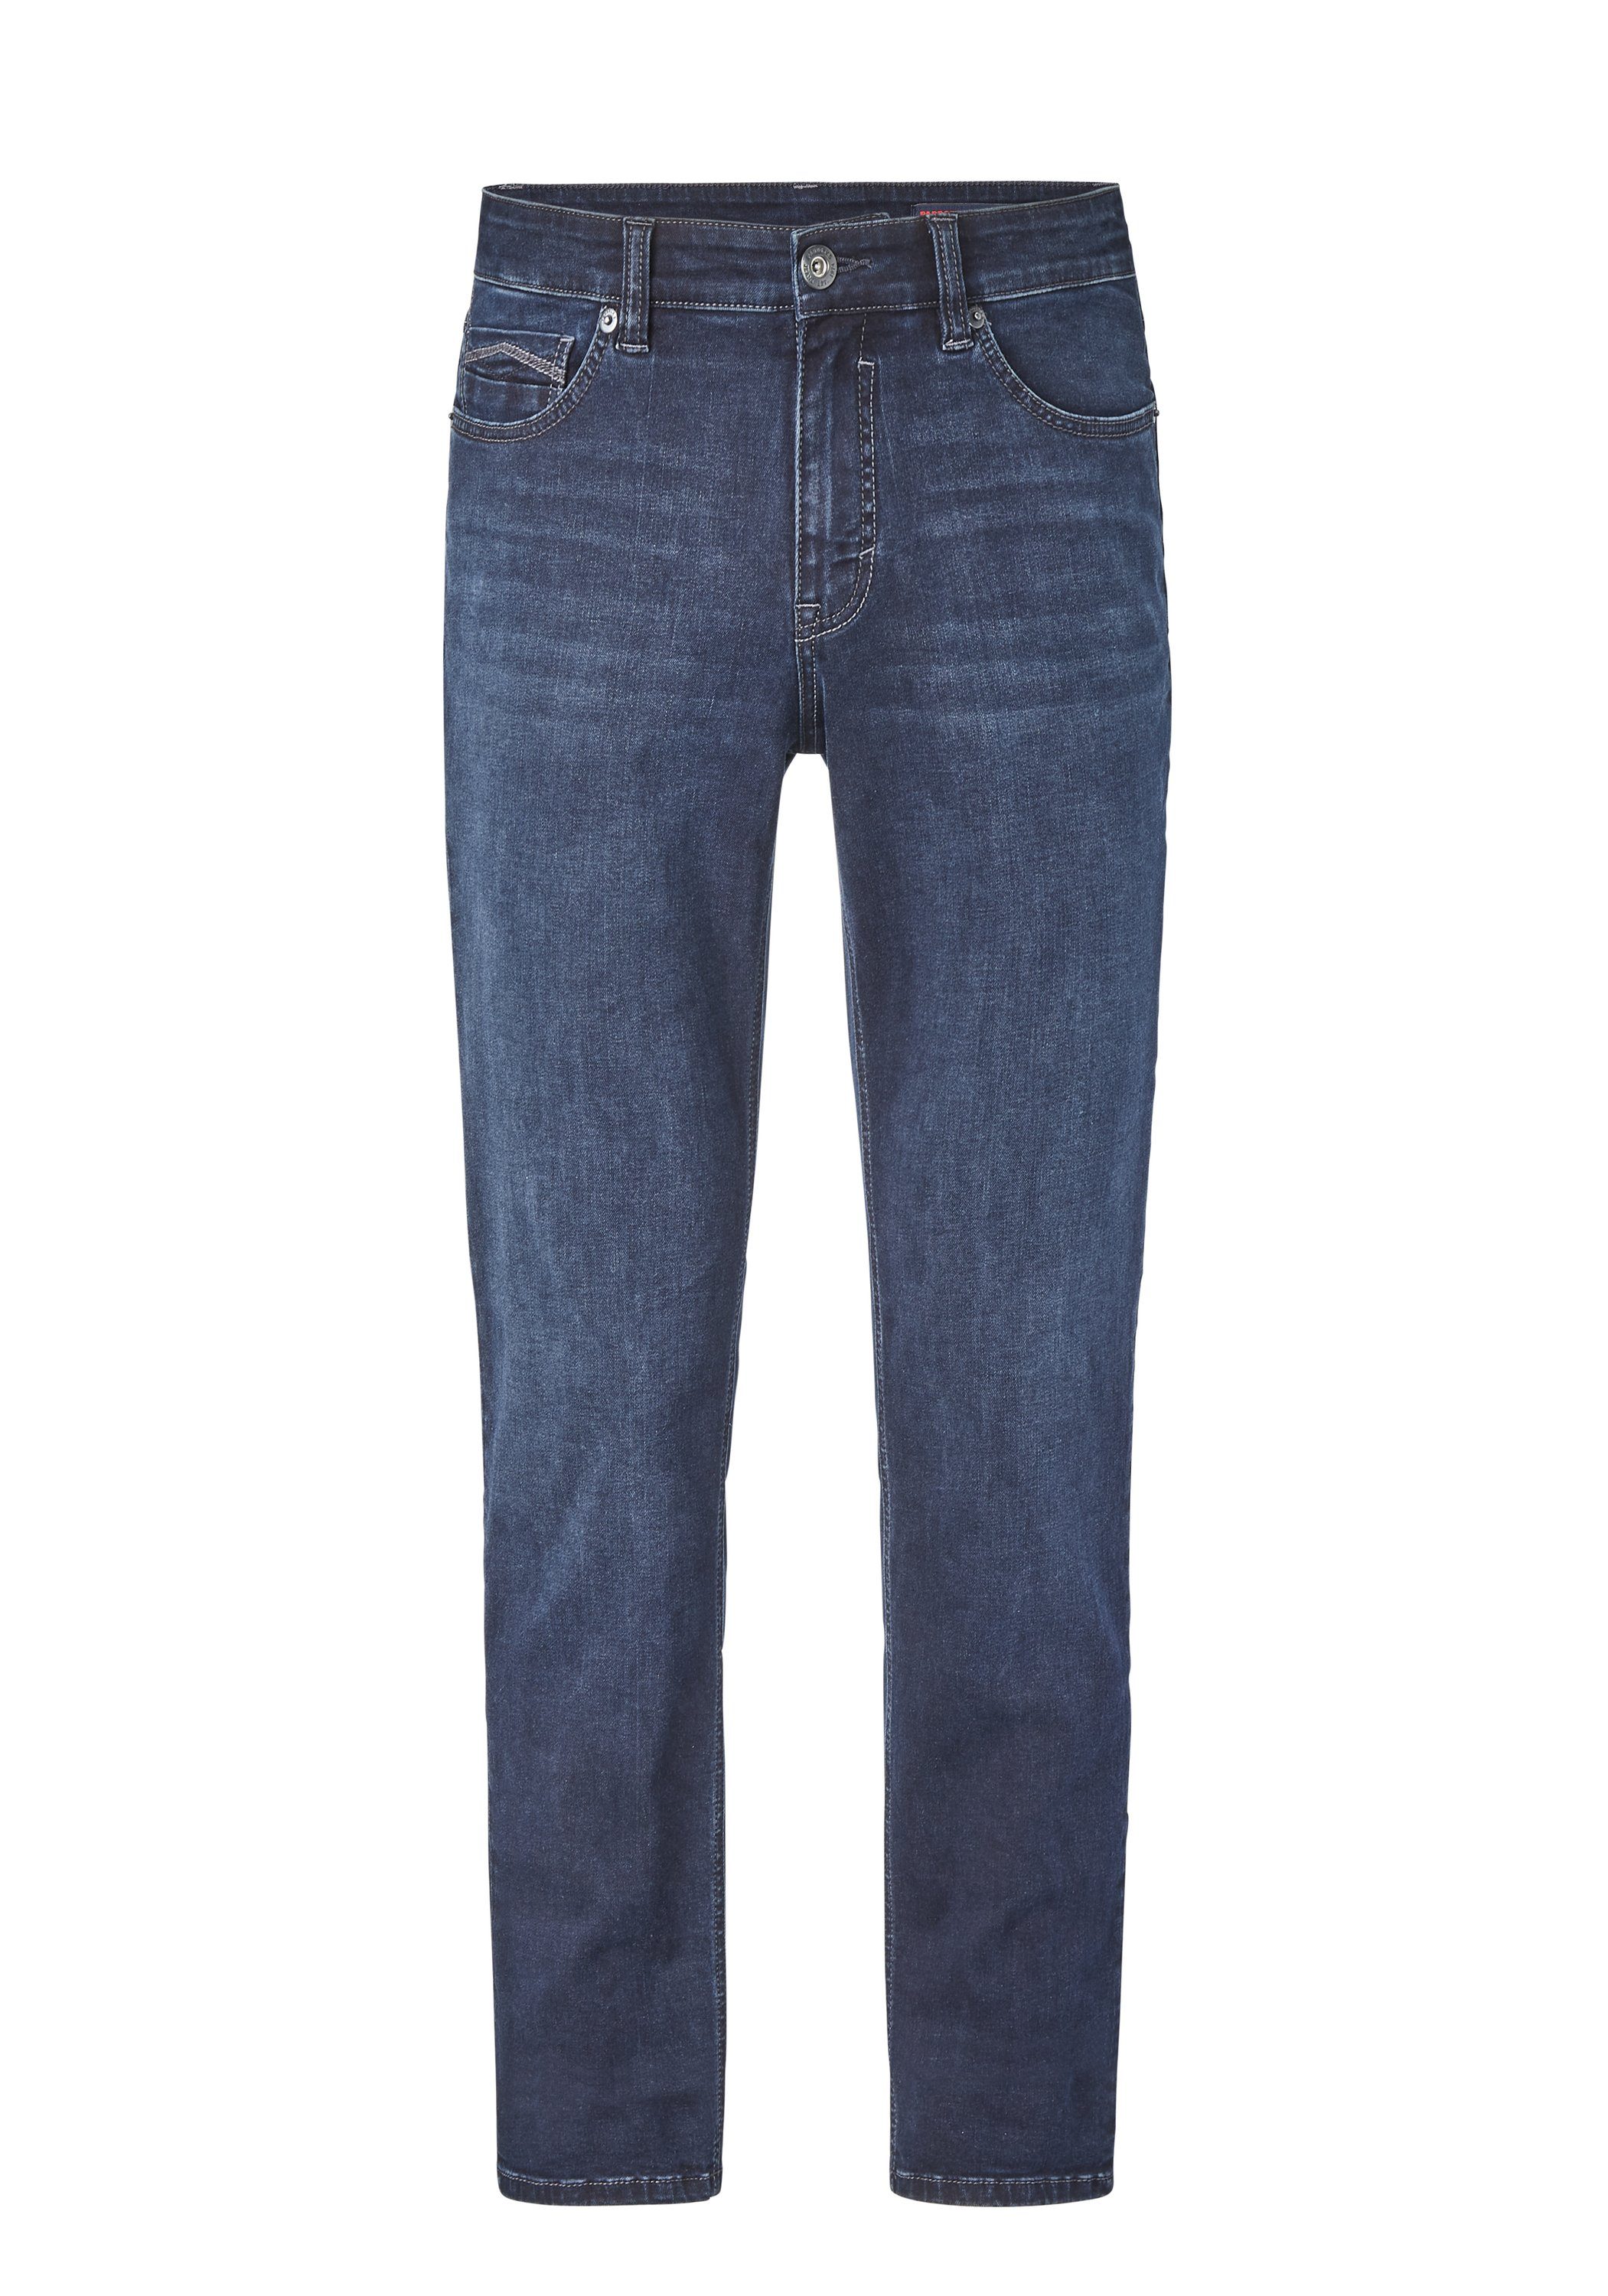 & Slim-fit-Jeans Comfort Jeans Elastizität Paddock's Slim-Fit Motion PIPE